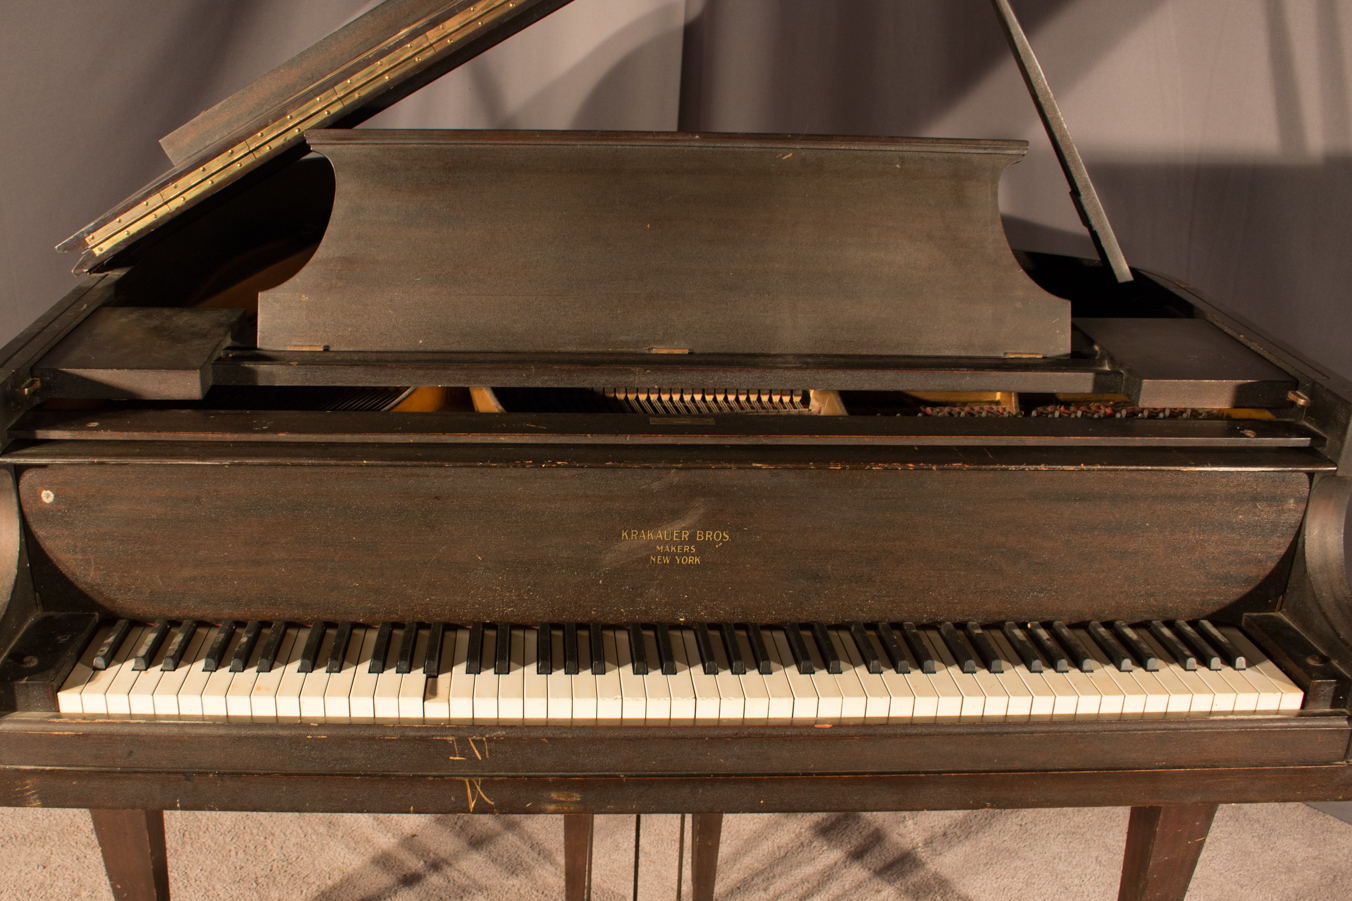 krakauer bros piano serial number 3887